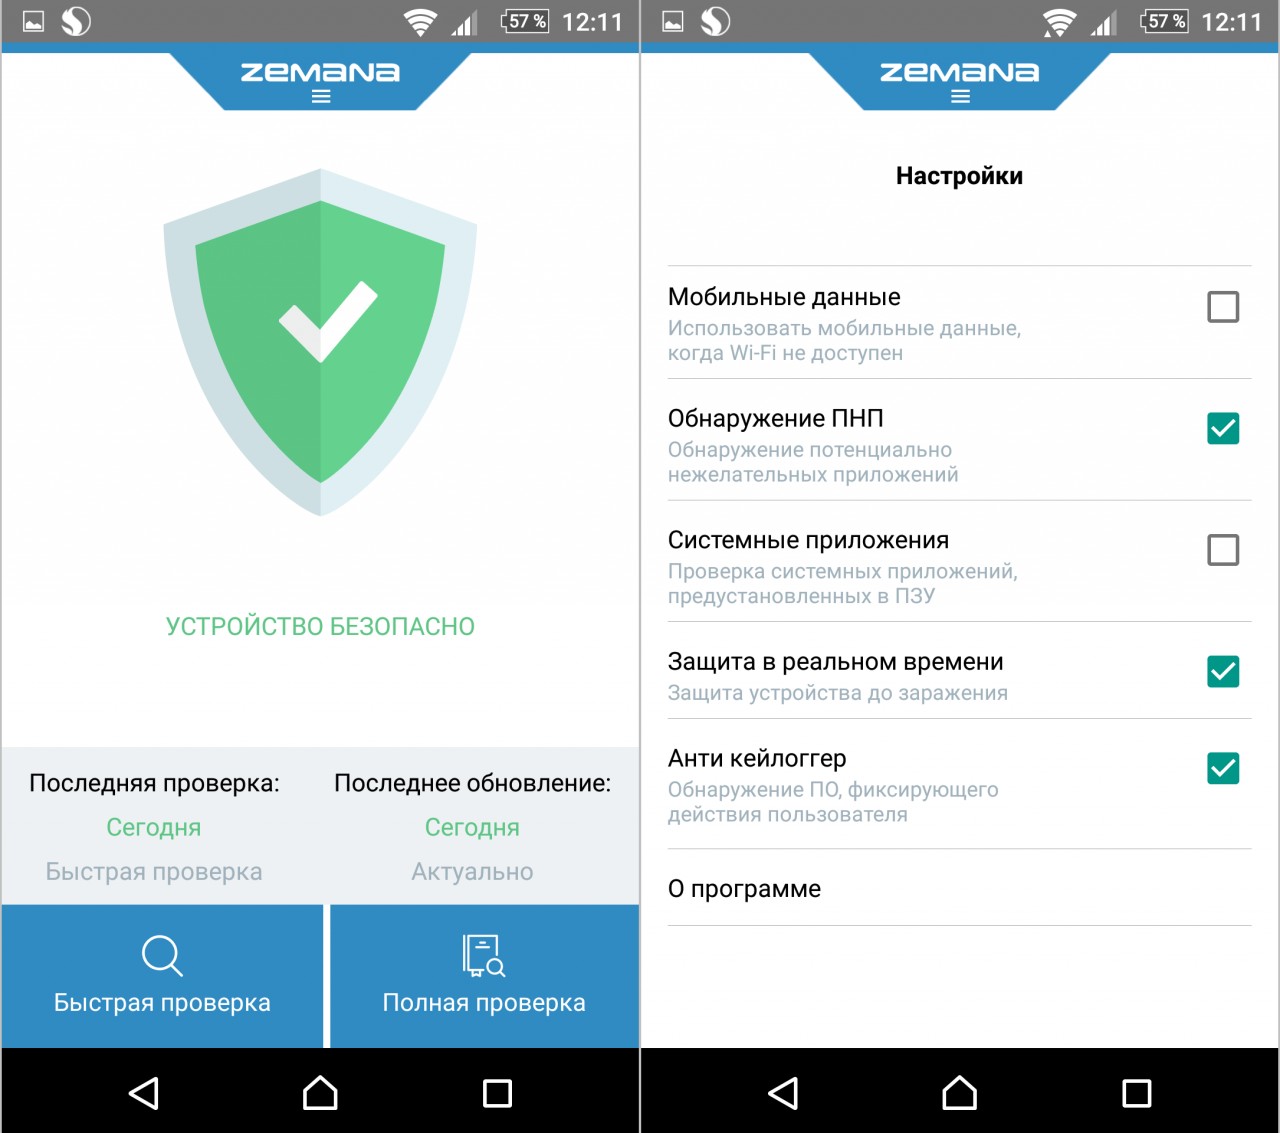 Zemana Mobile Antivirus для Android - бесплатная Premium лицензия